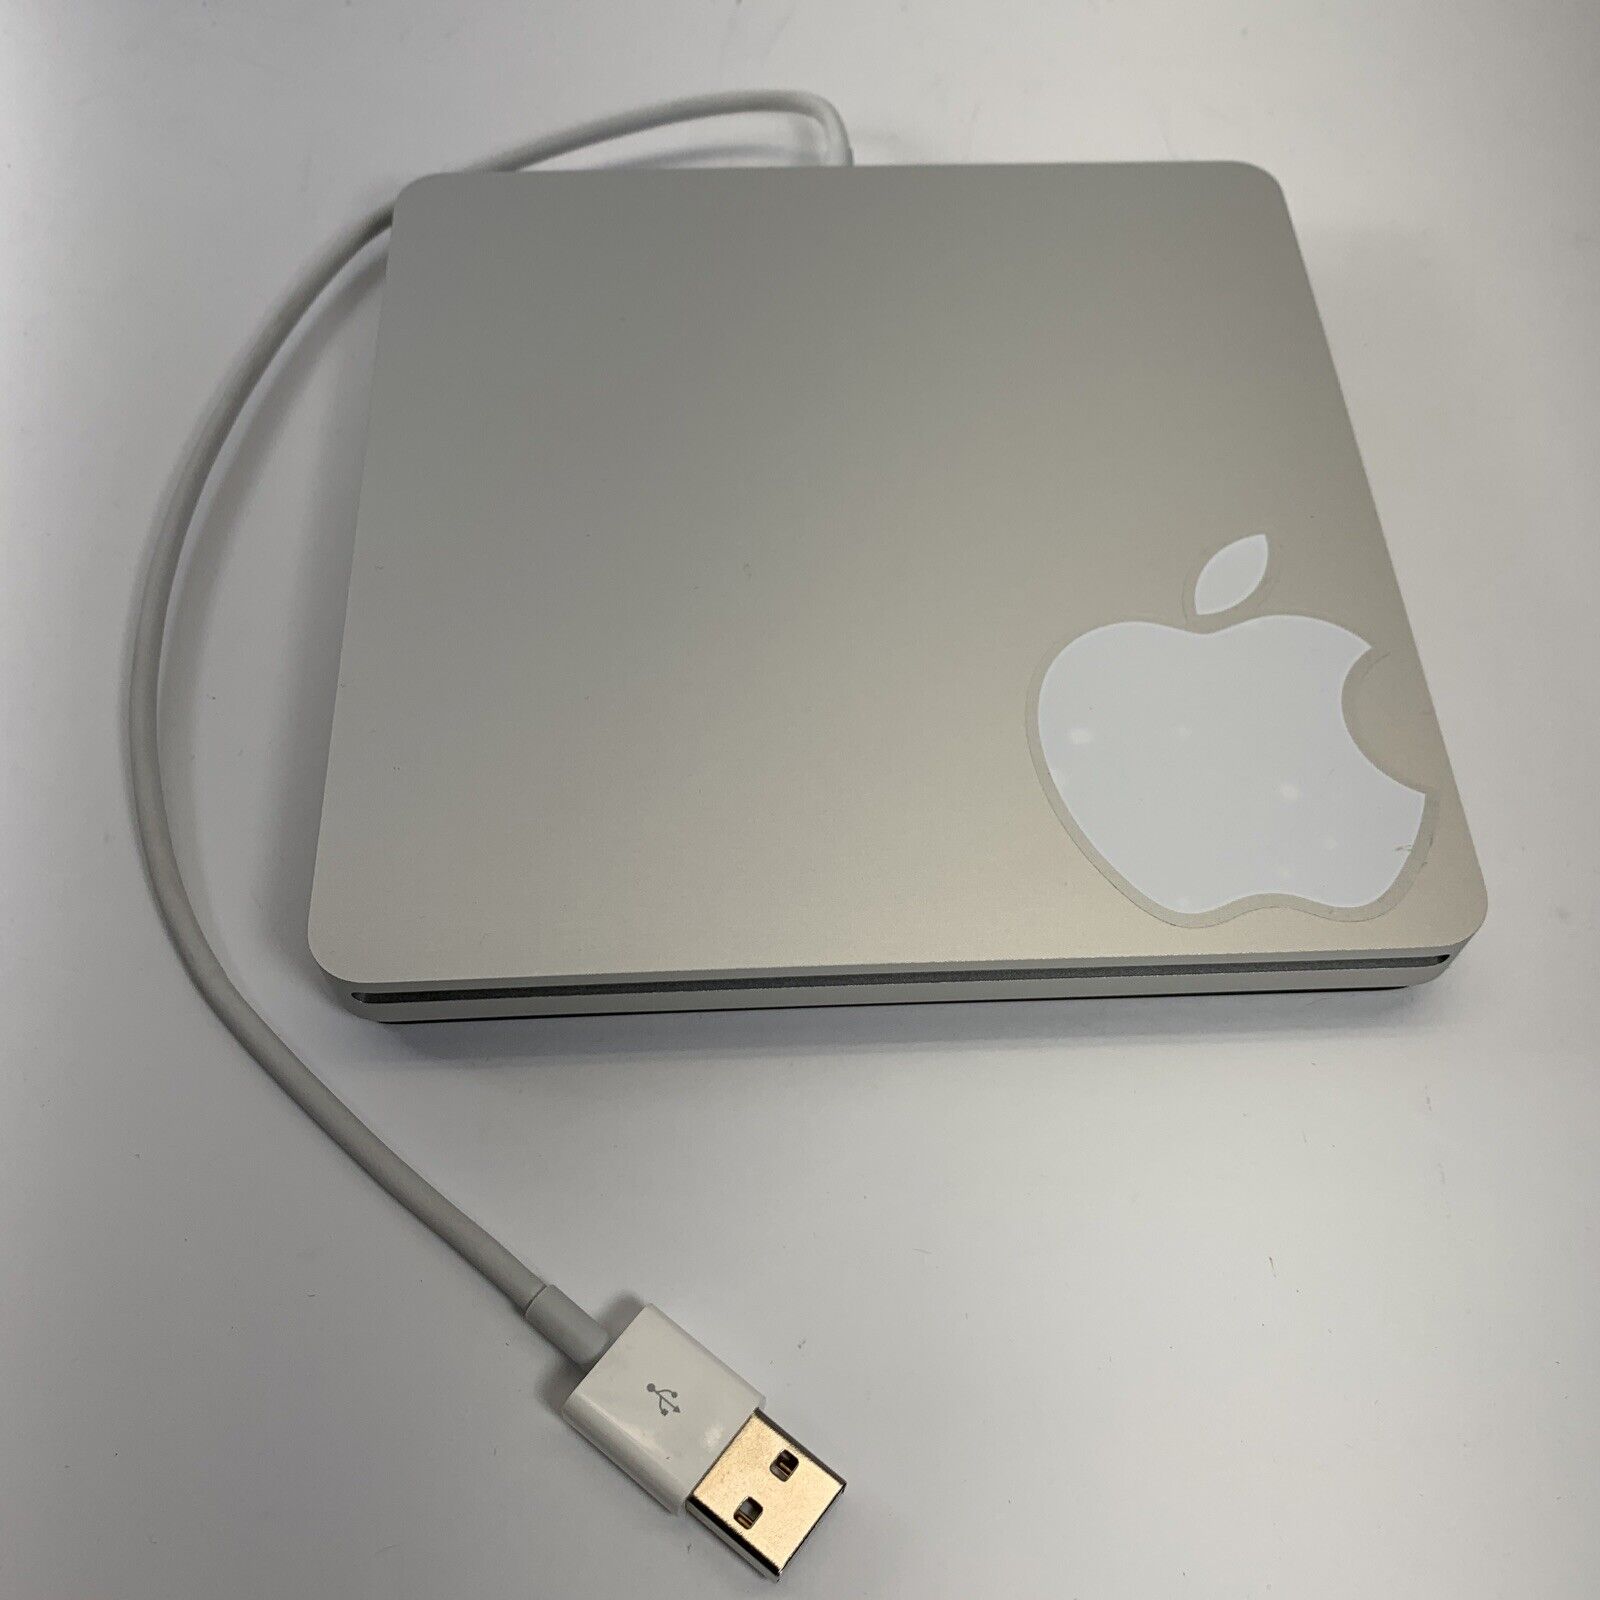 Apple A1270 MacBook Air USB SuperDrive, Optical Drive